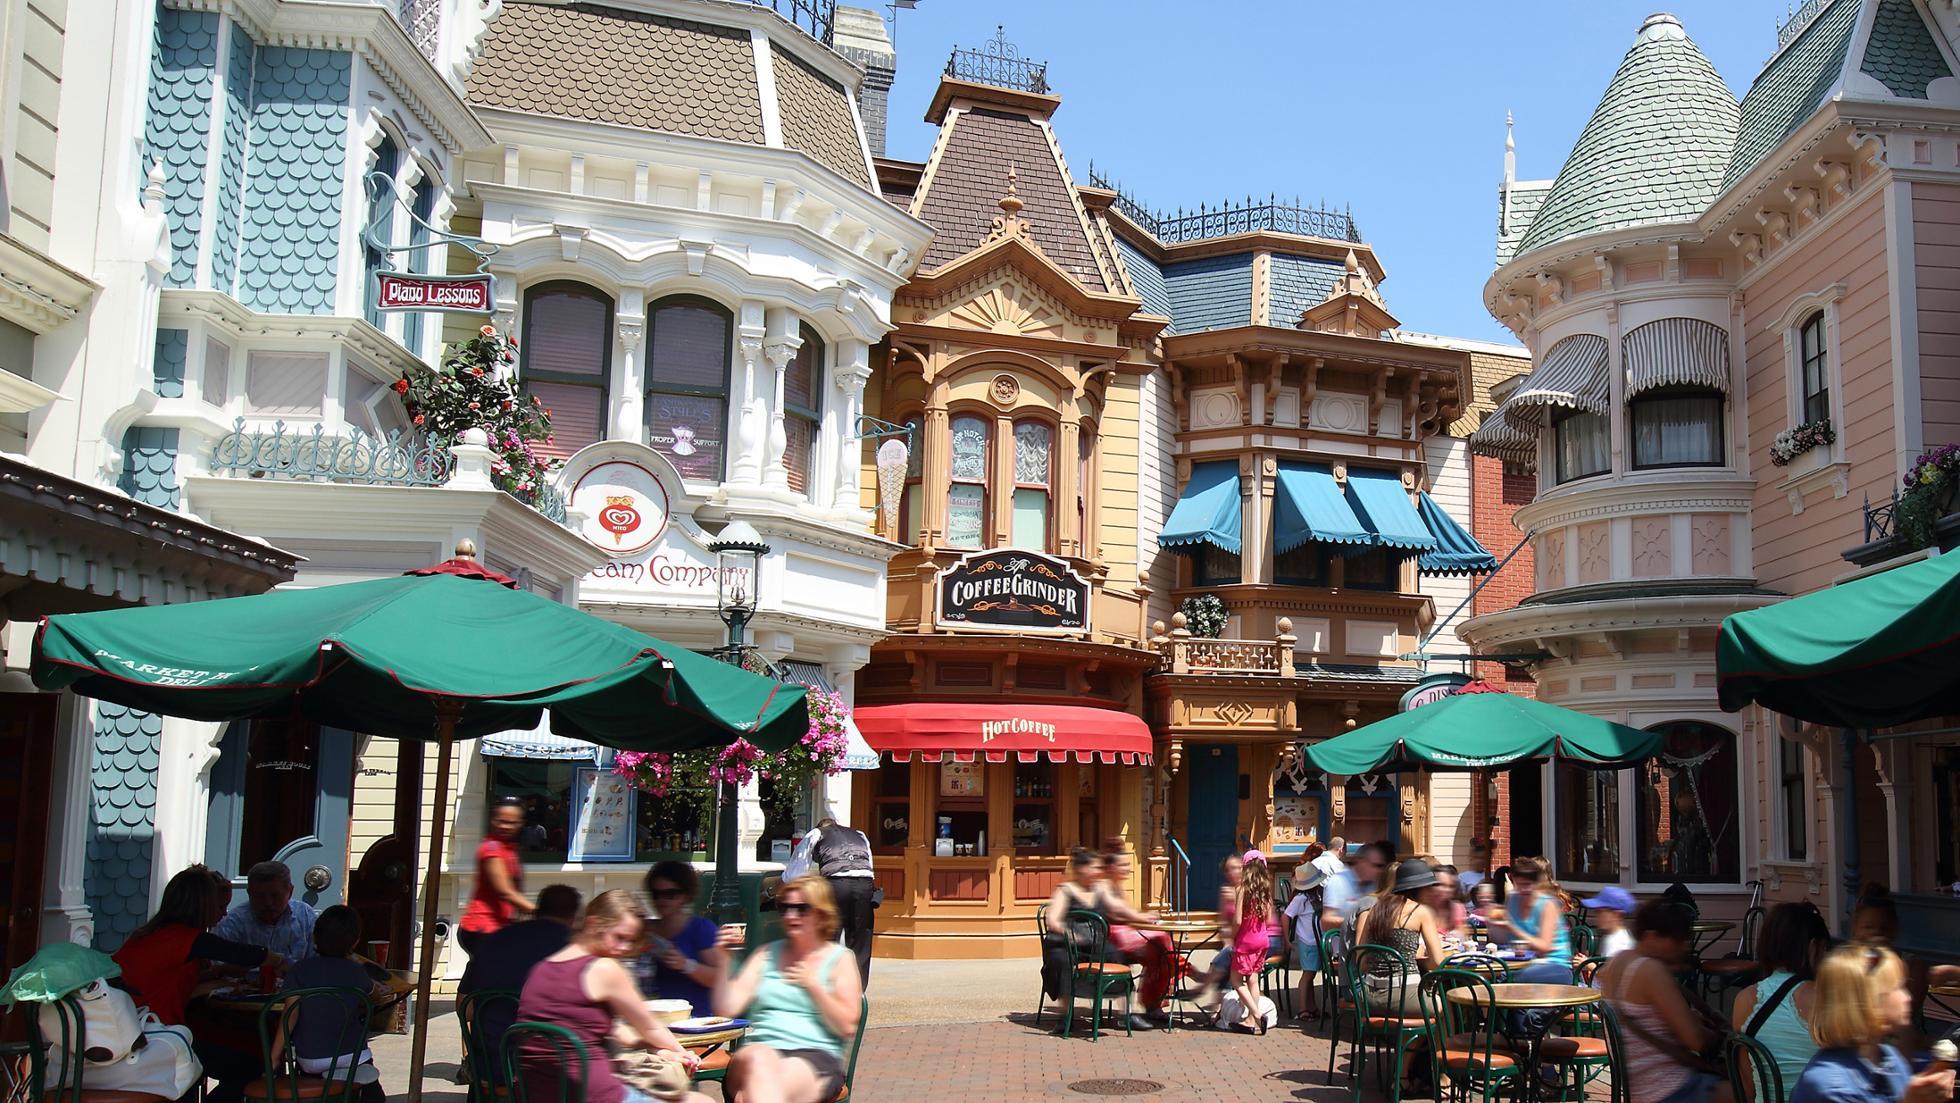 Main Street at Disneyland Paris